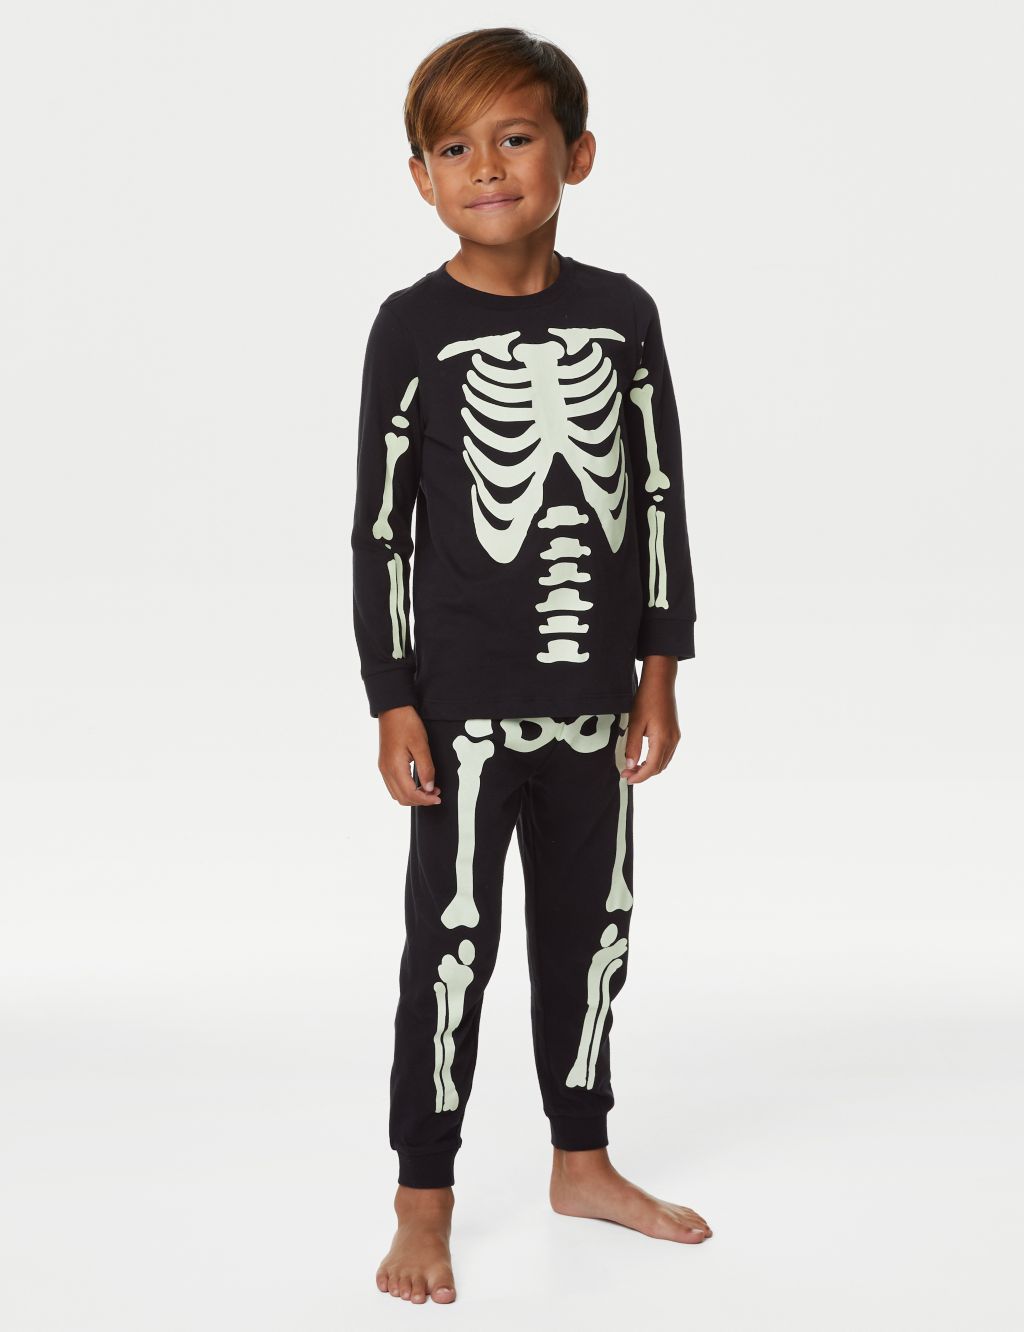 Kids' Glow in the Dark Halloween Skeleton Pyjamas (3-16 Yrs) image 1